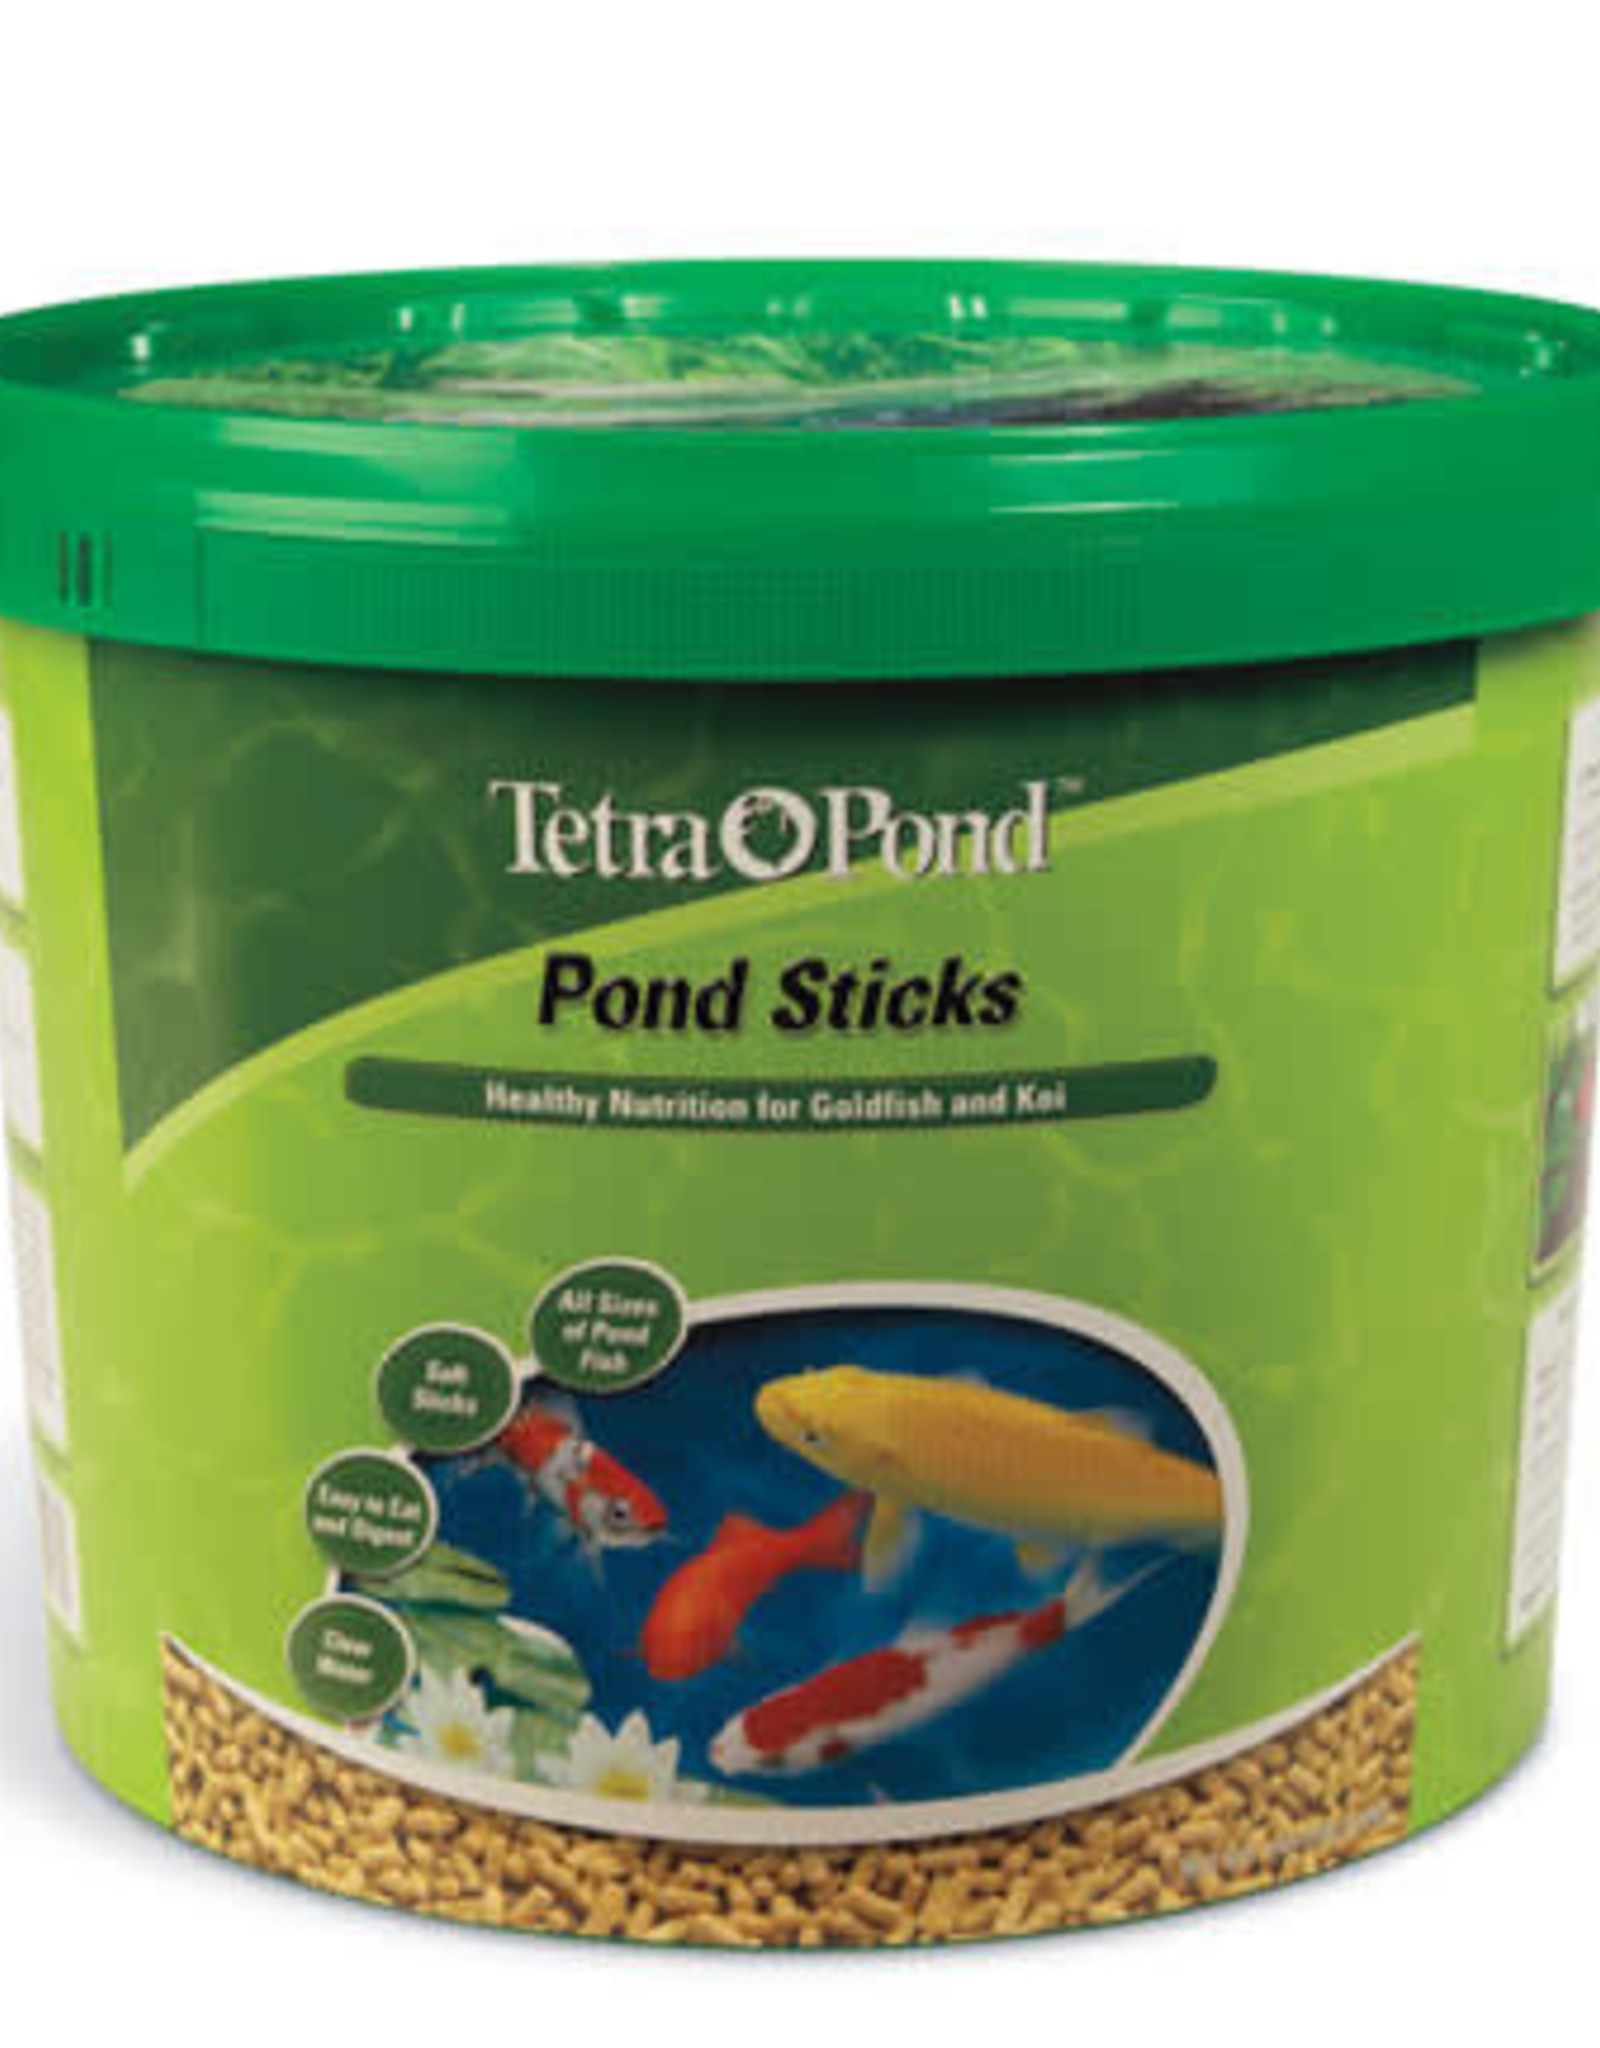 Tetra Pond Sticks Goldfish & Koi Fish Food